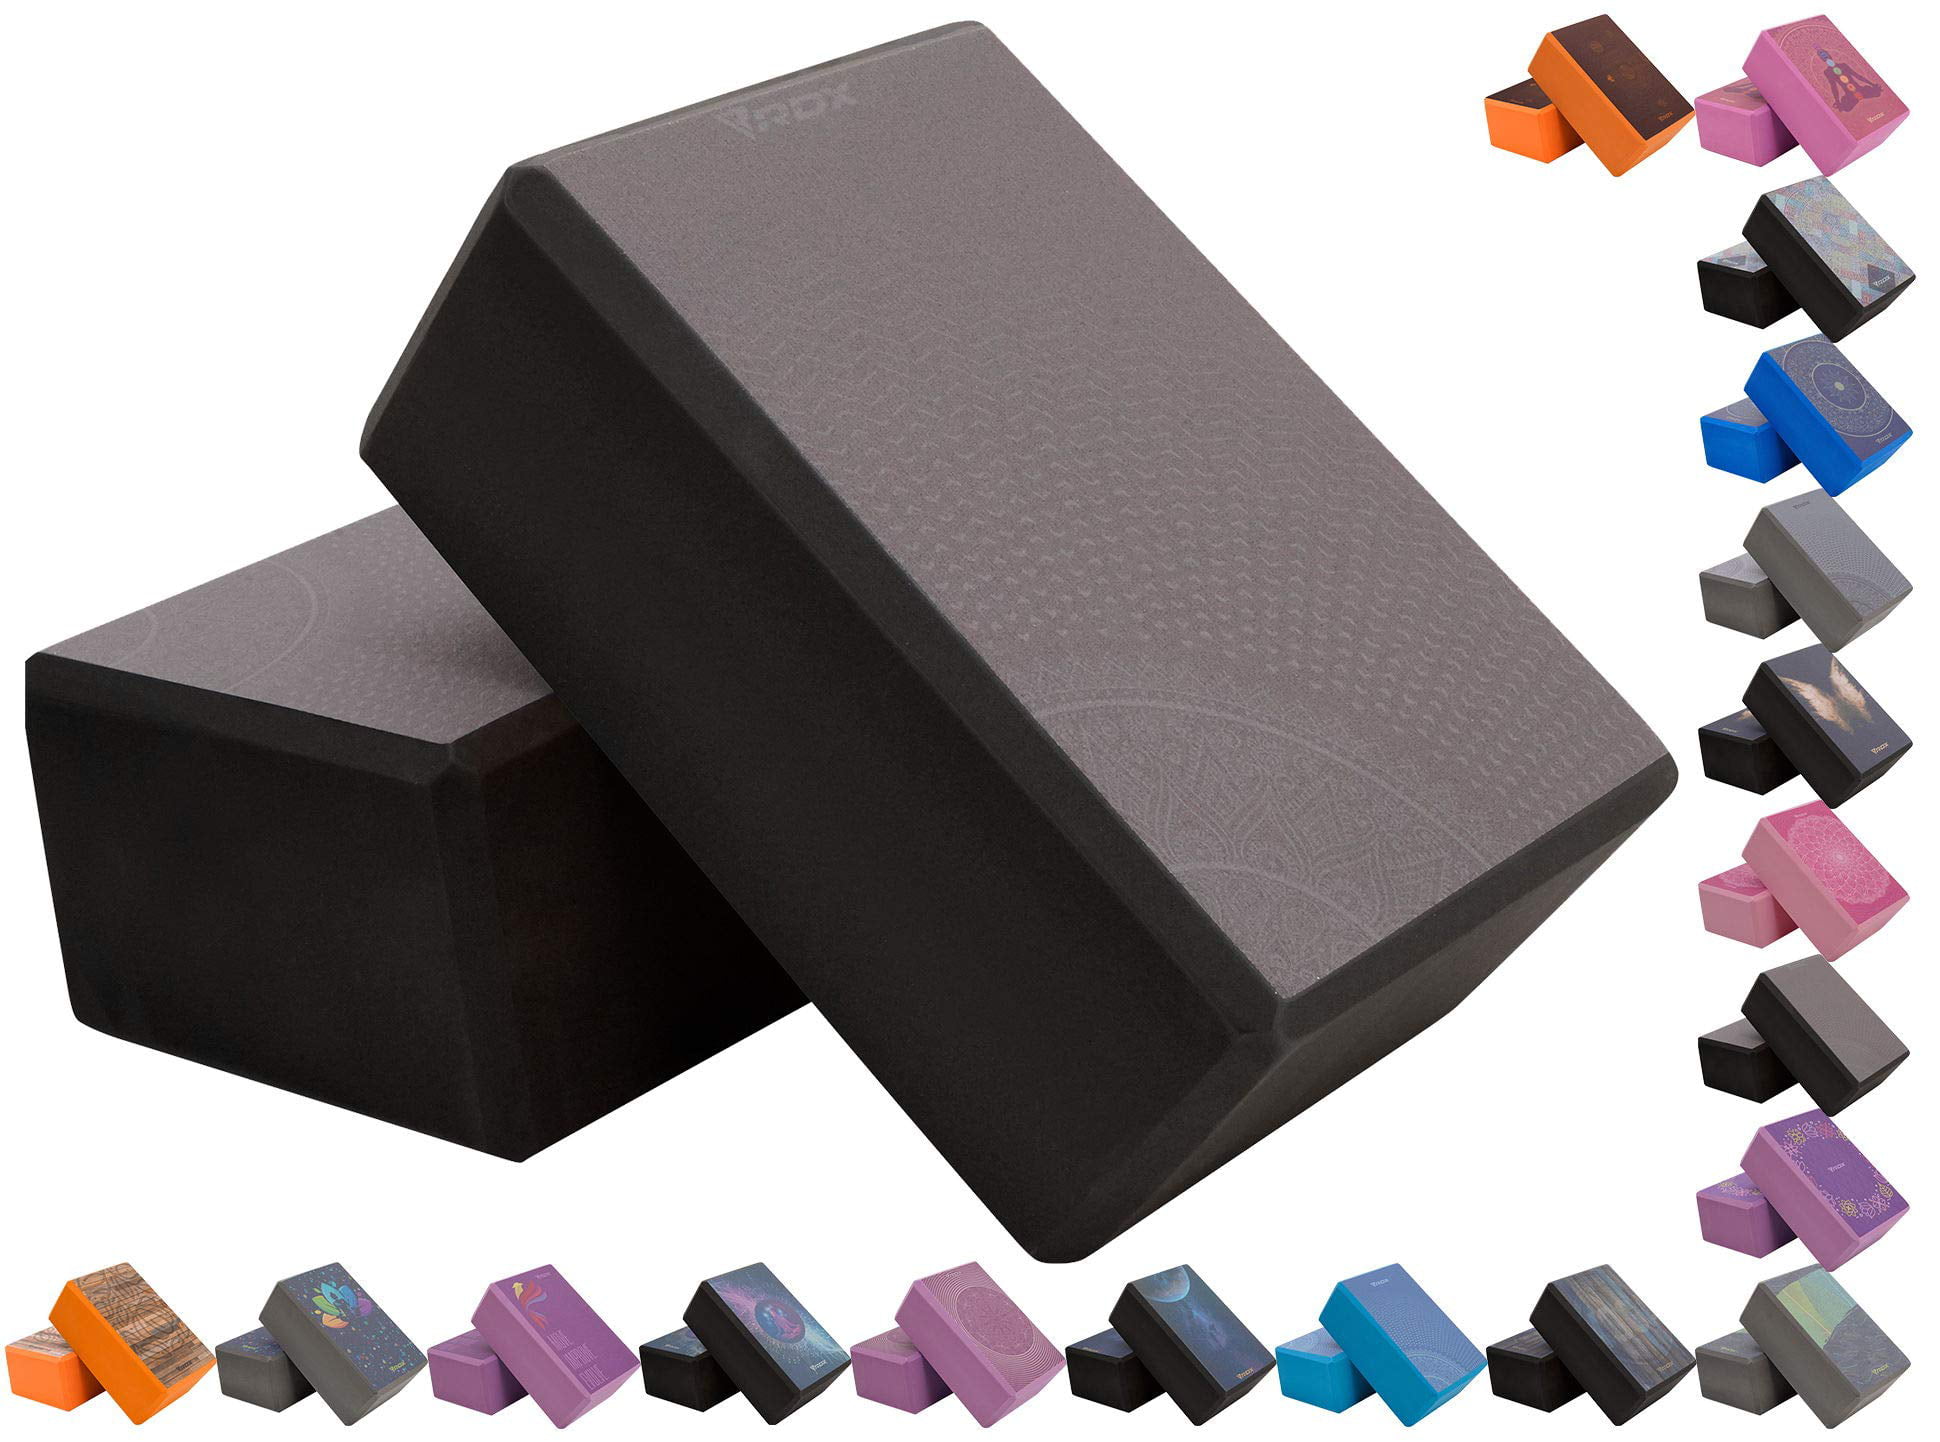 RDX Yoga Block Set Non-Slip High-Density Eva Foam Brick for Pilates Flexibility Body Balance 23x15x9.8CM Easy Grip Surface for Stability Strength Training Deepen Poses Exercise Office Home Gym 